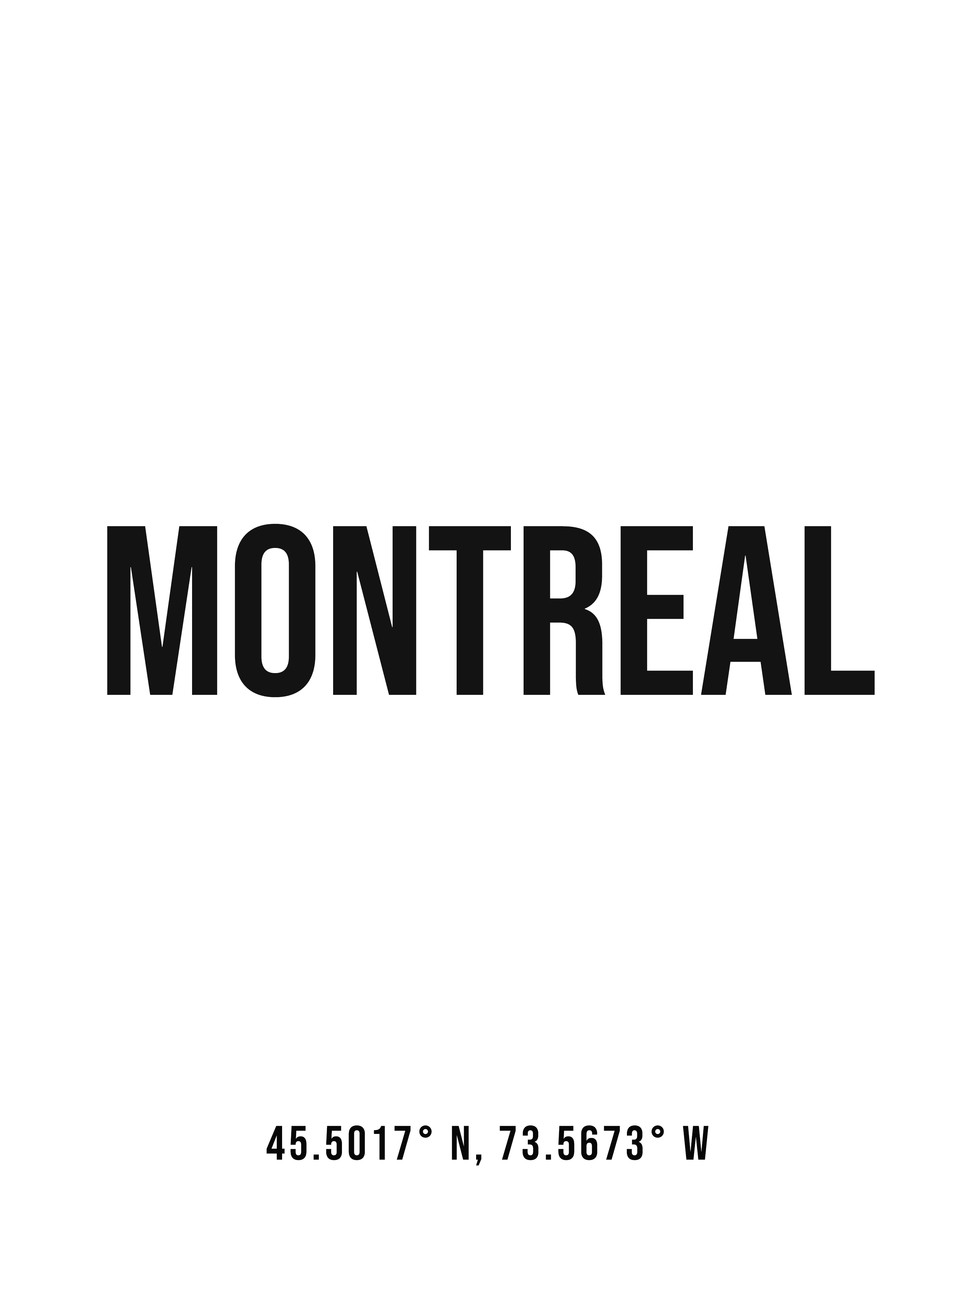 Illustration Montreal simple coordinates